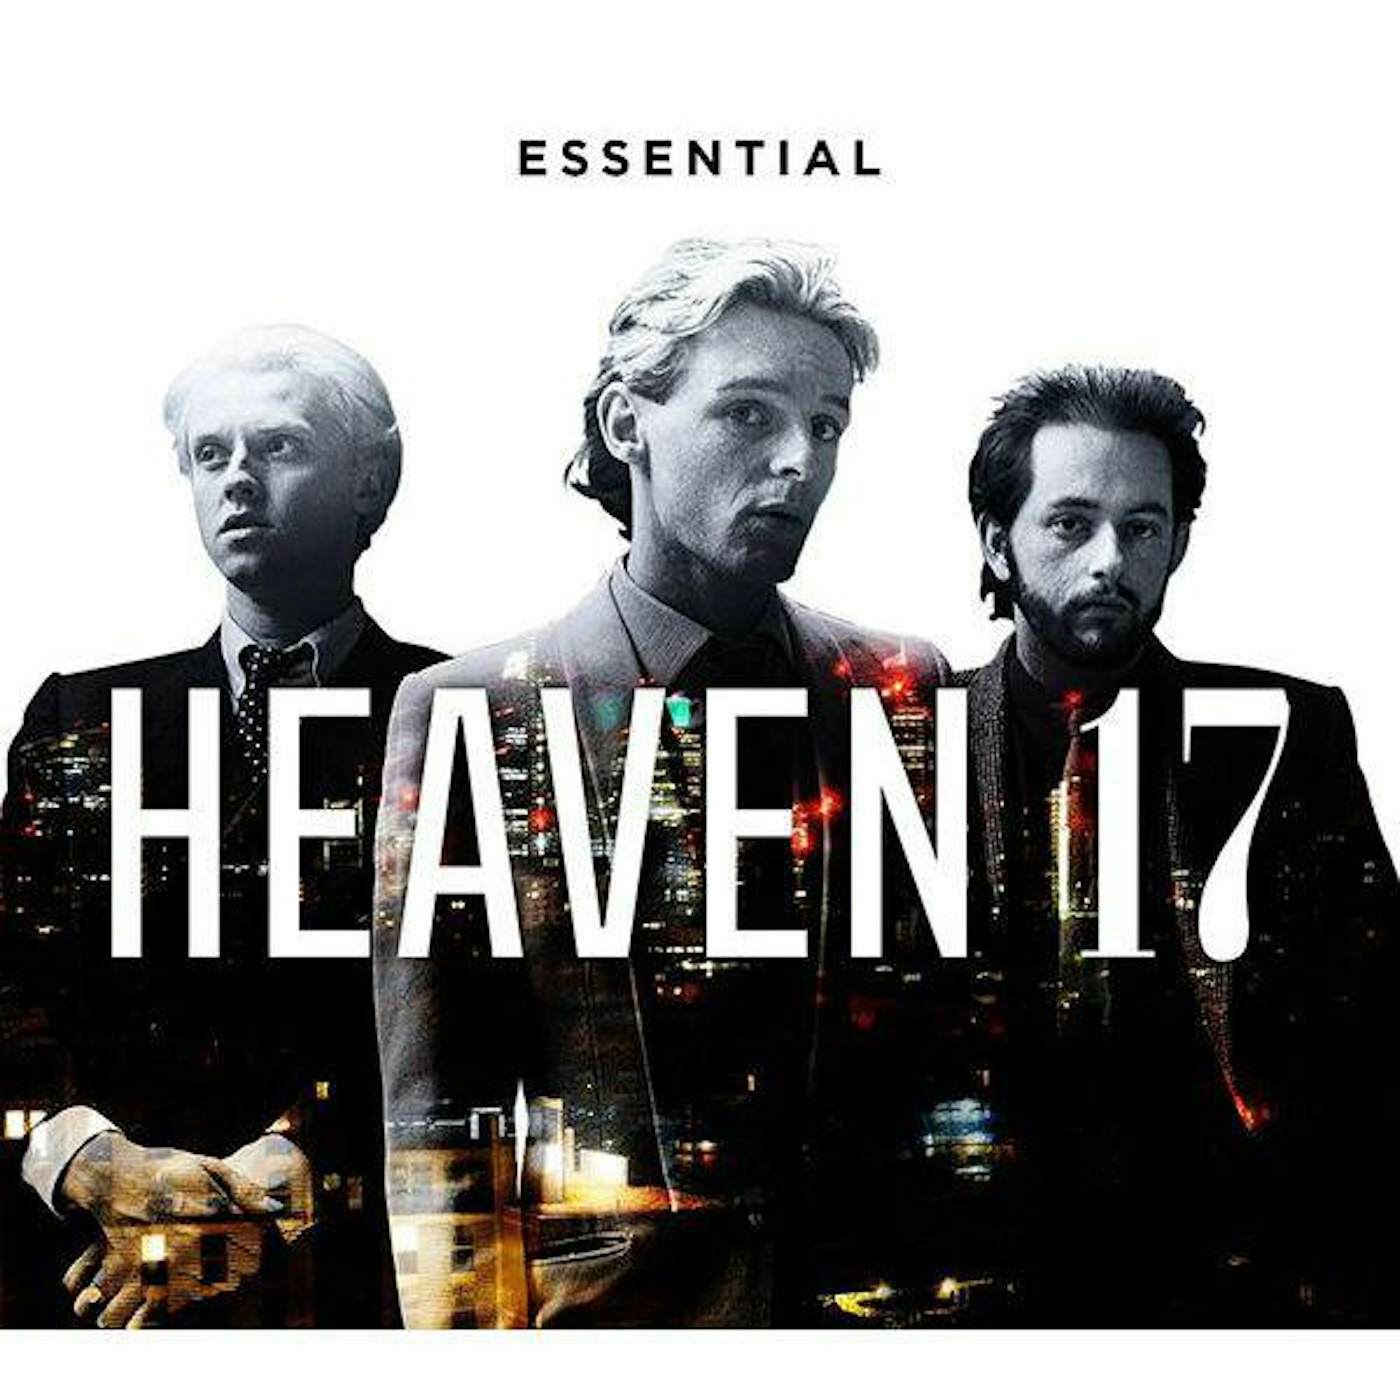 ESSENTIAL HEAVEN 17 CD